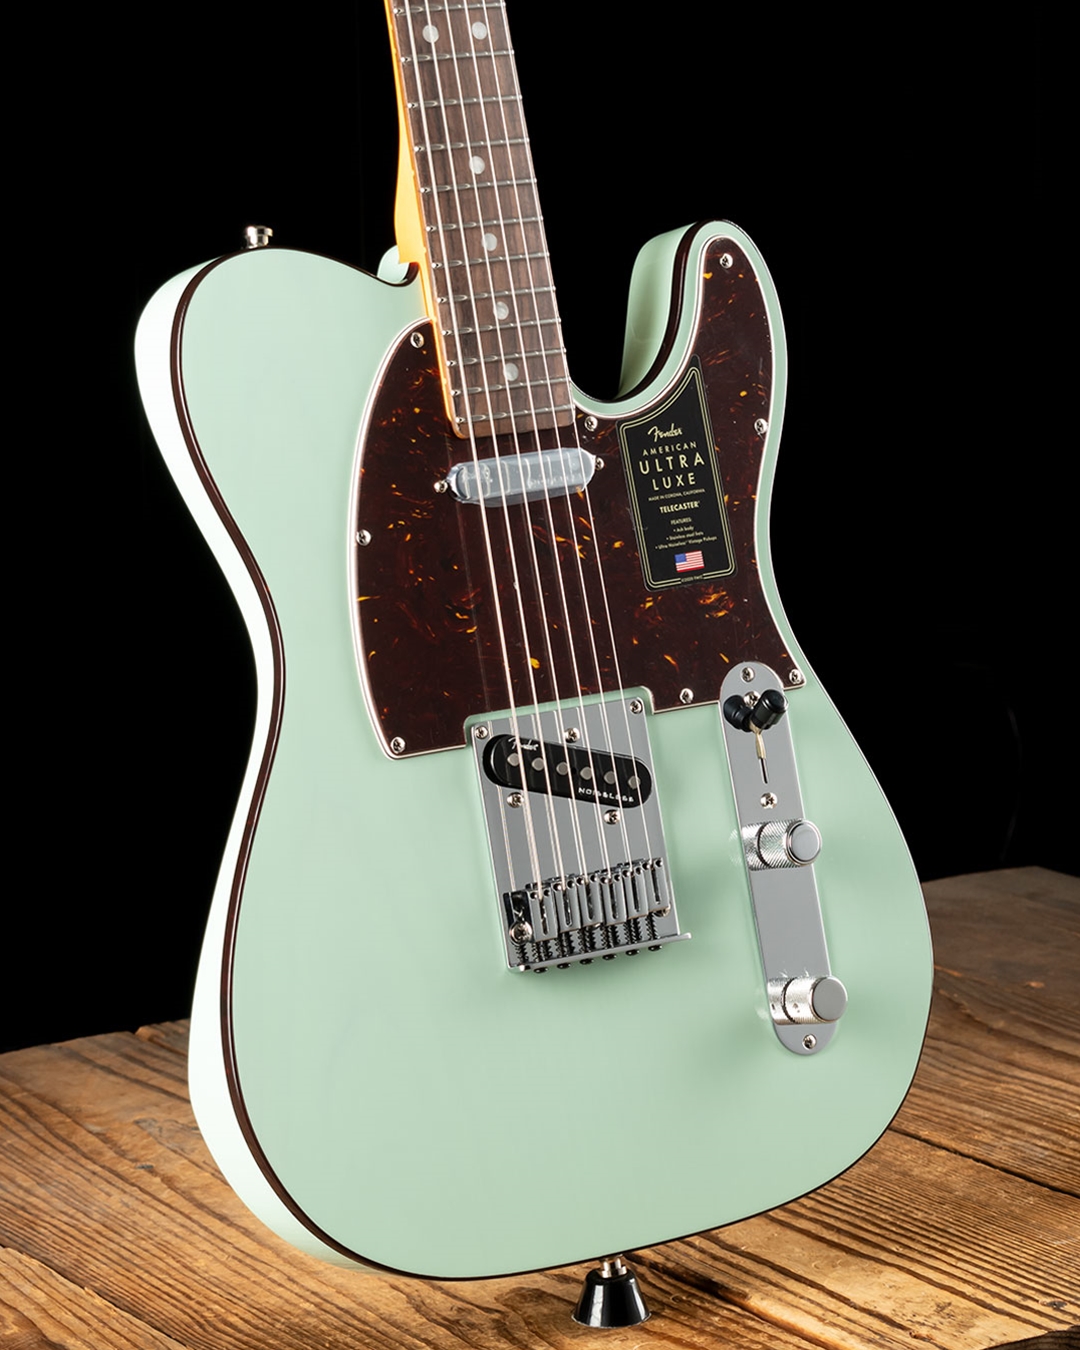 Fender Ultra Luxe Telecaster Rosewood Fingerboard Transparent Surf Gre -  Willcutt Guitars